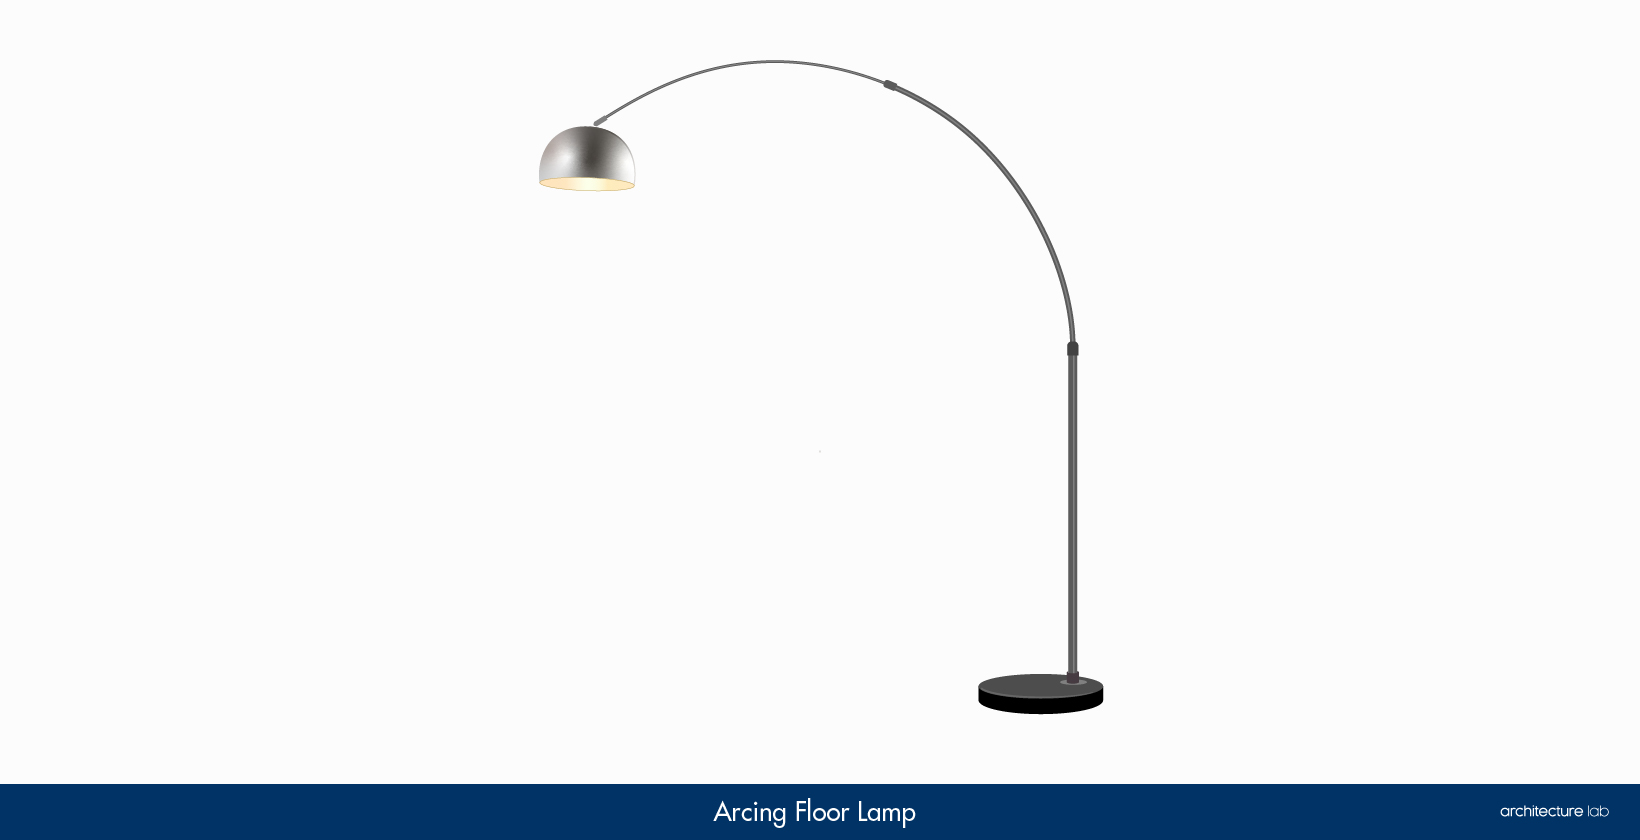 12. Arcing floor lamp